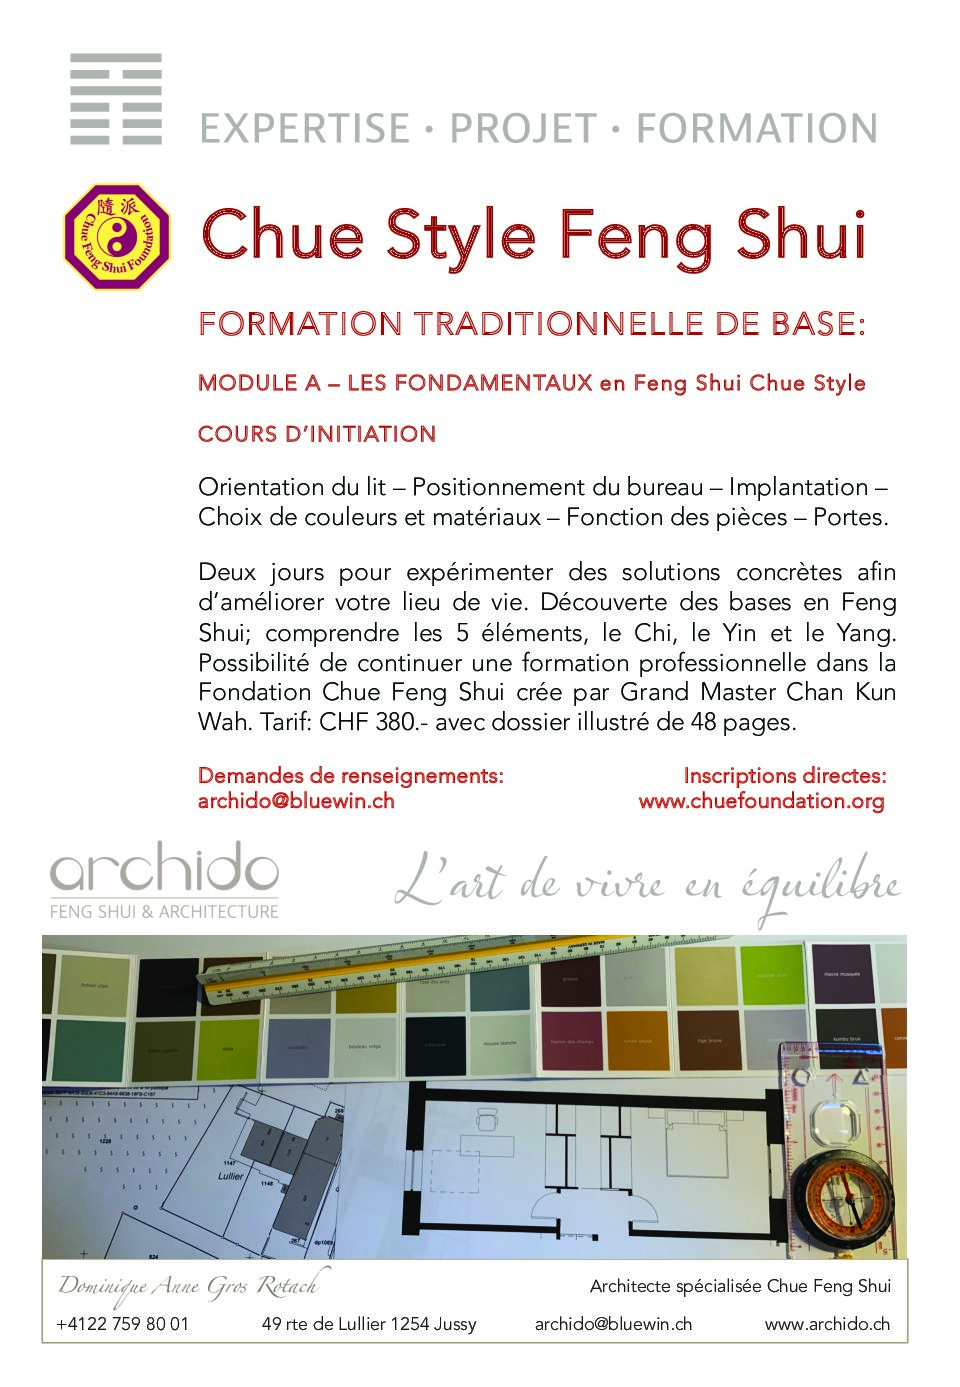 Module A : Fondamentaux en Feng Shui Chue style